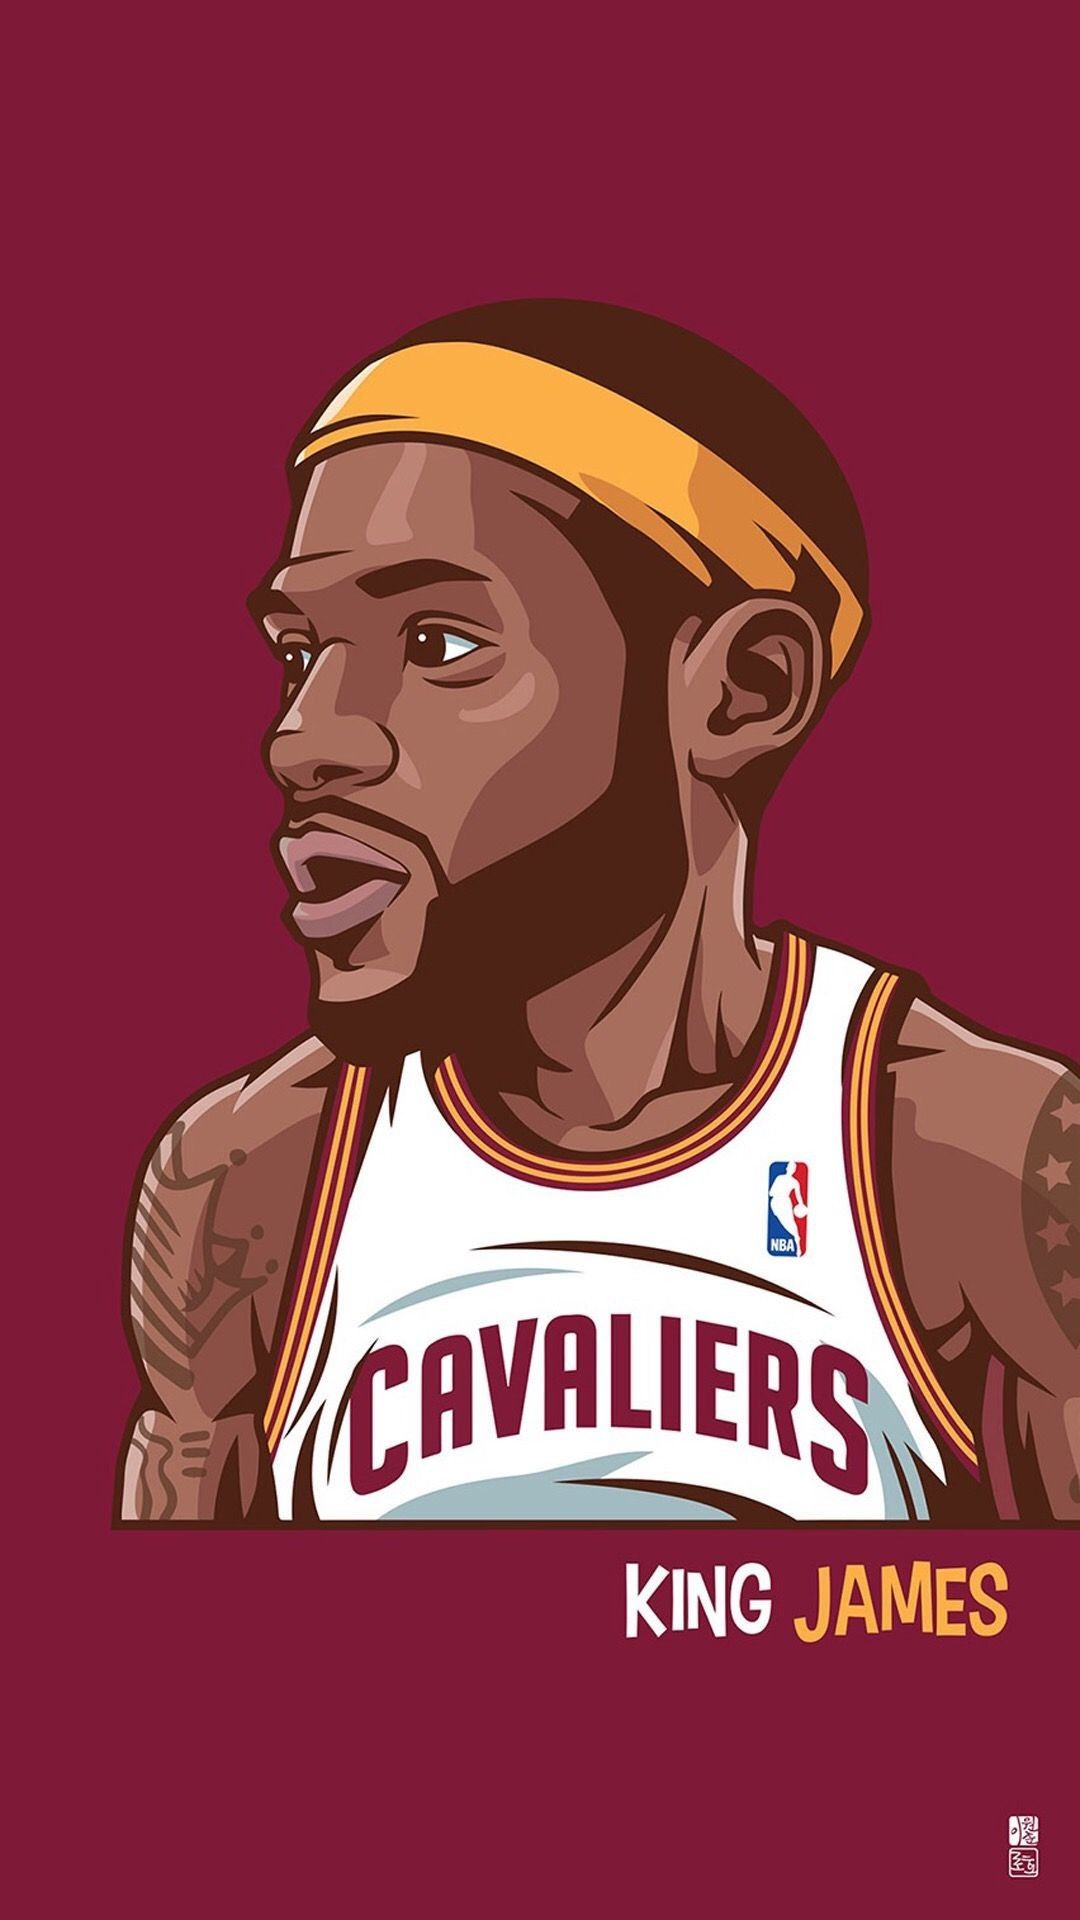 1080x1920 Cartoon NBA Players Wallpapers